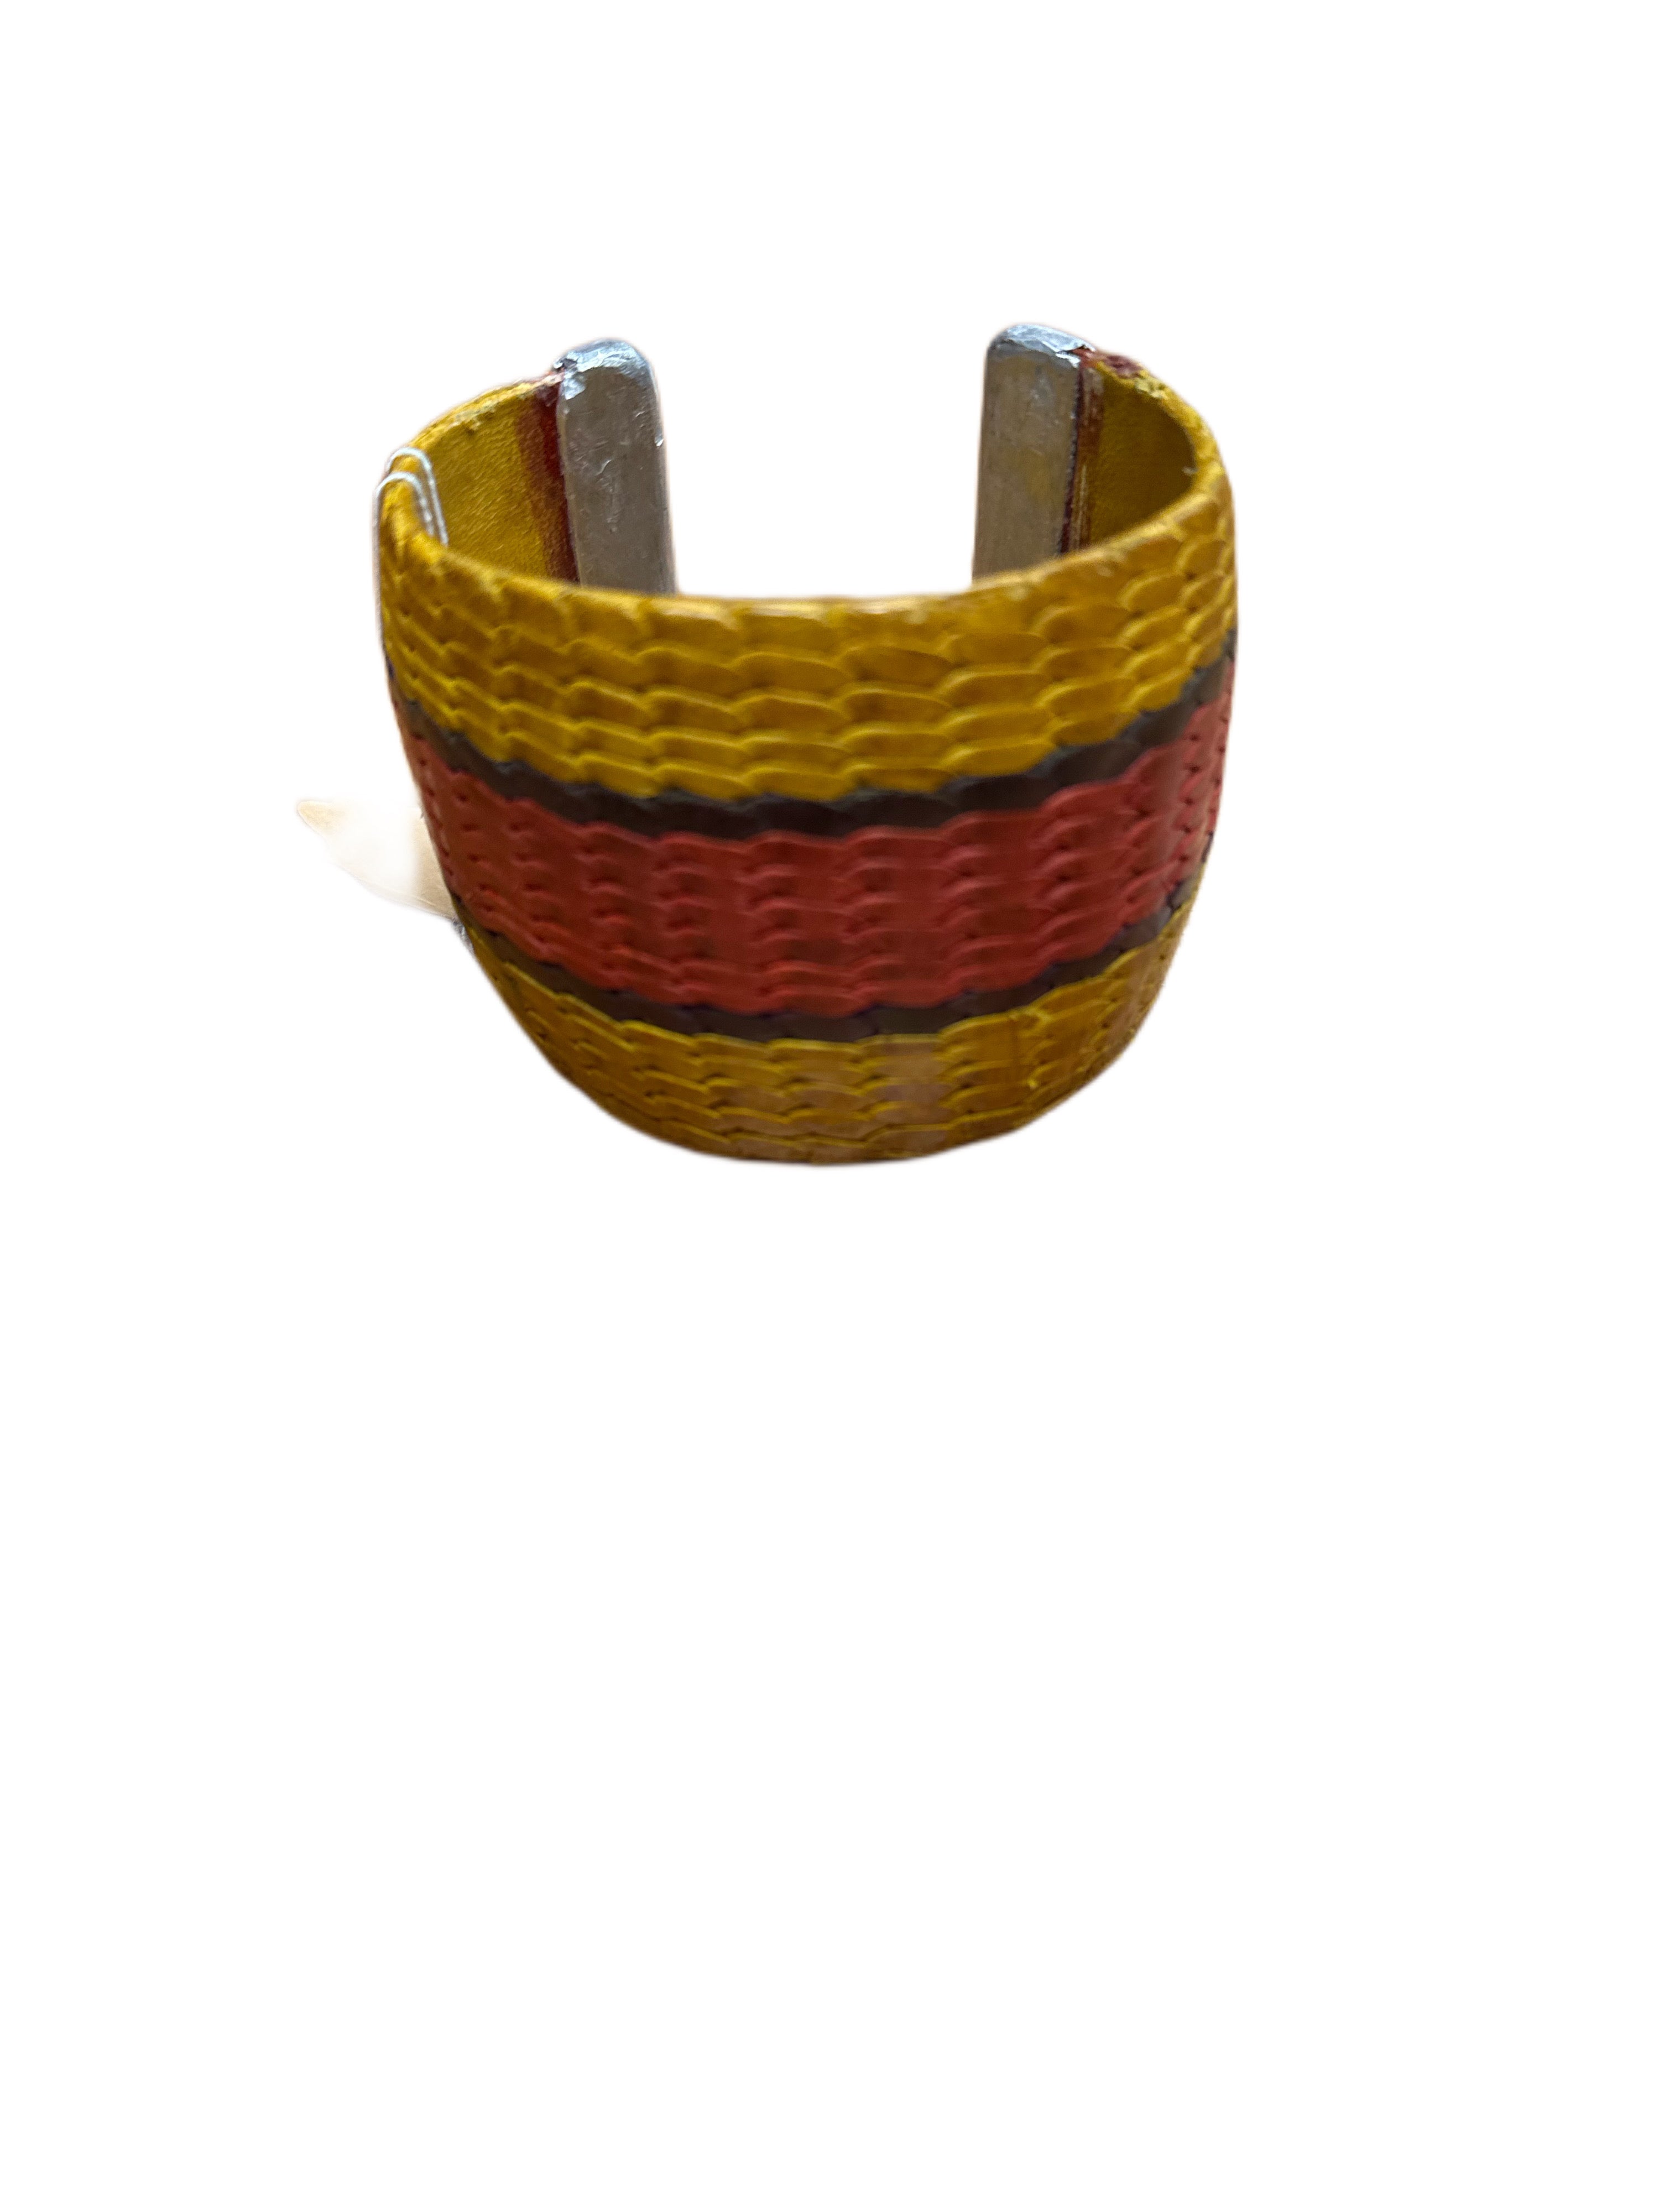 Woven leather cuff bracelets